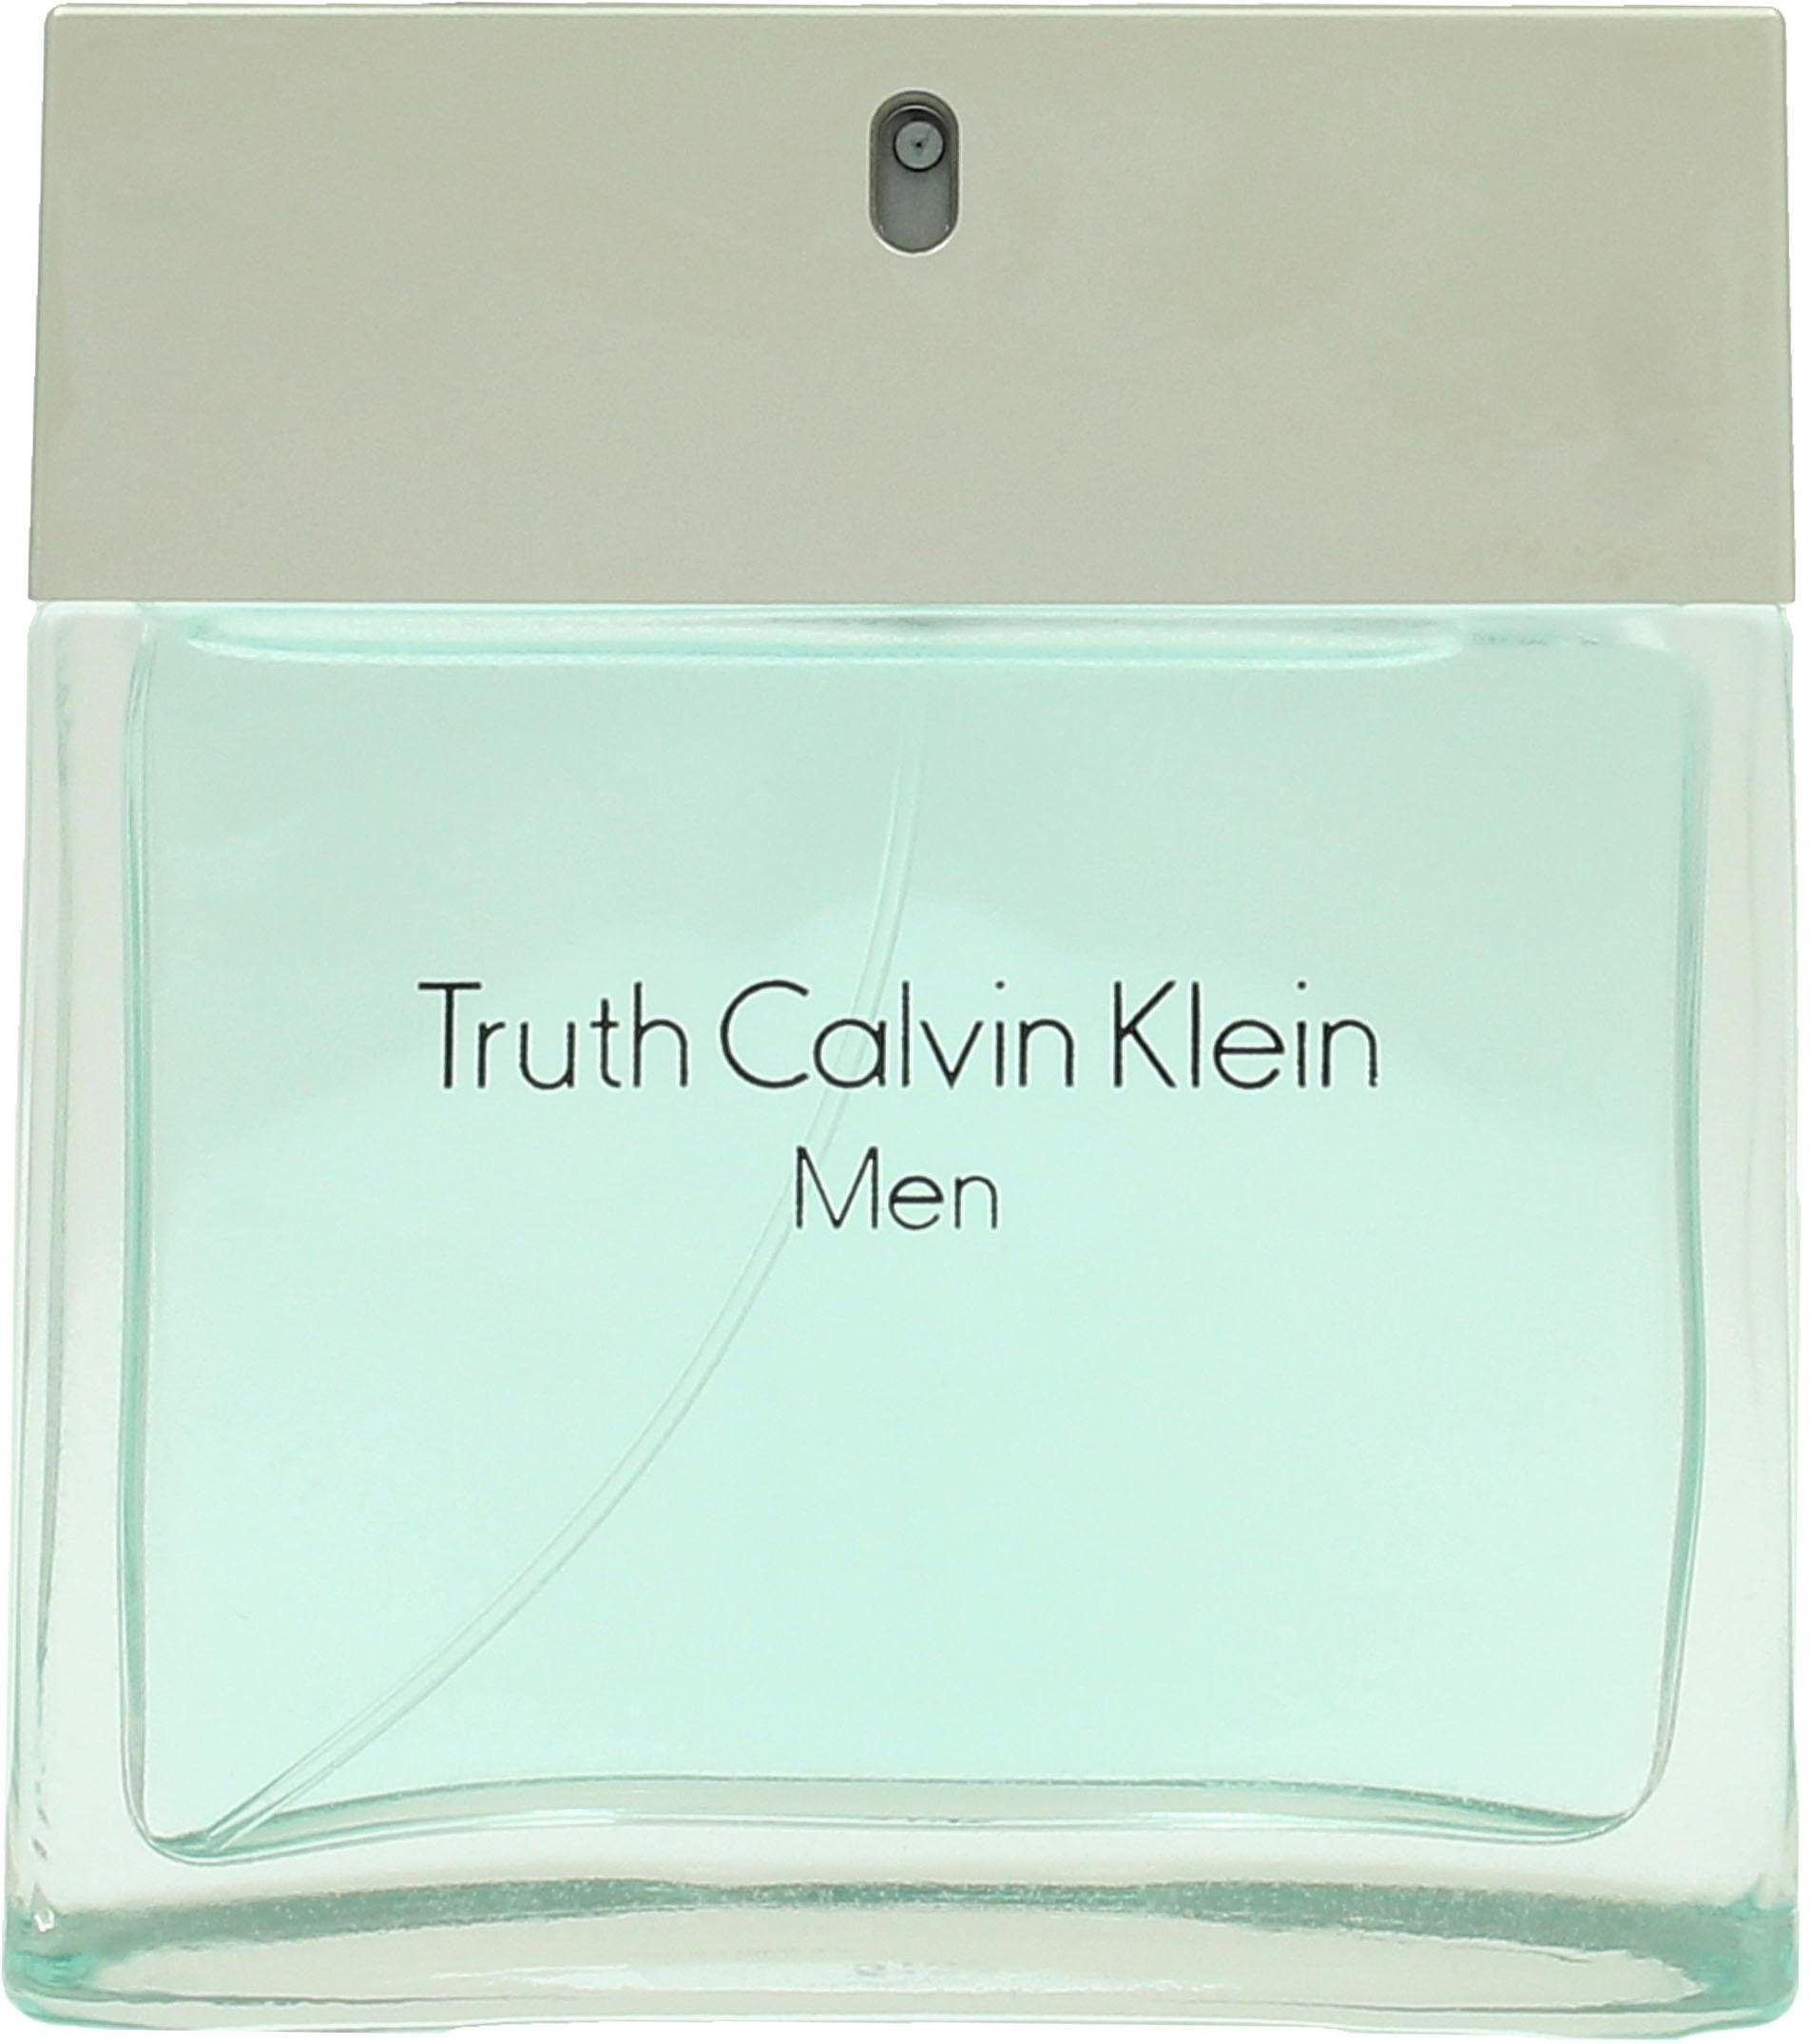 Eau Klein Truth Toilette de Calvin Men